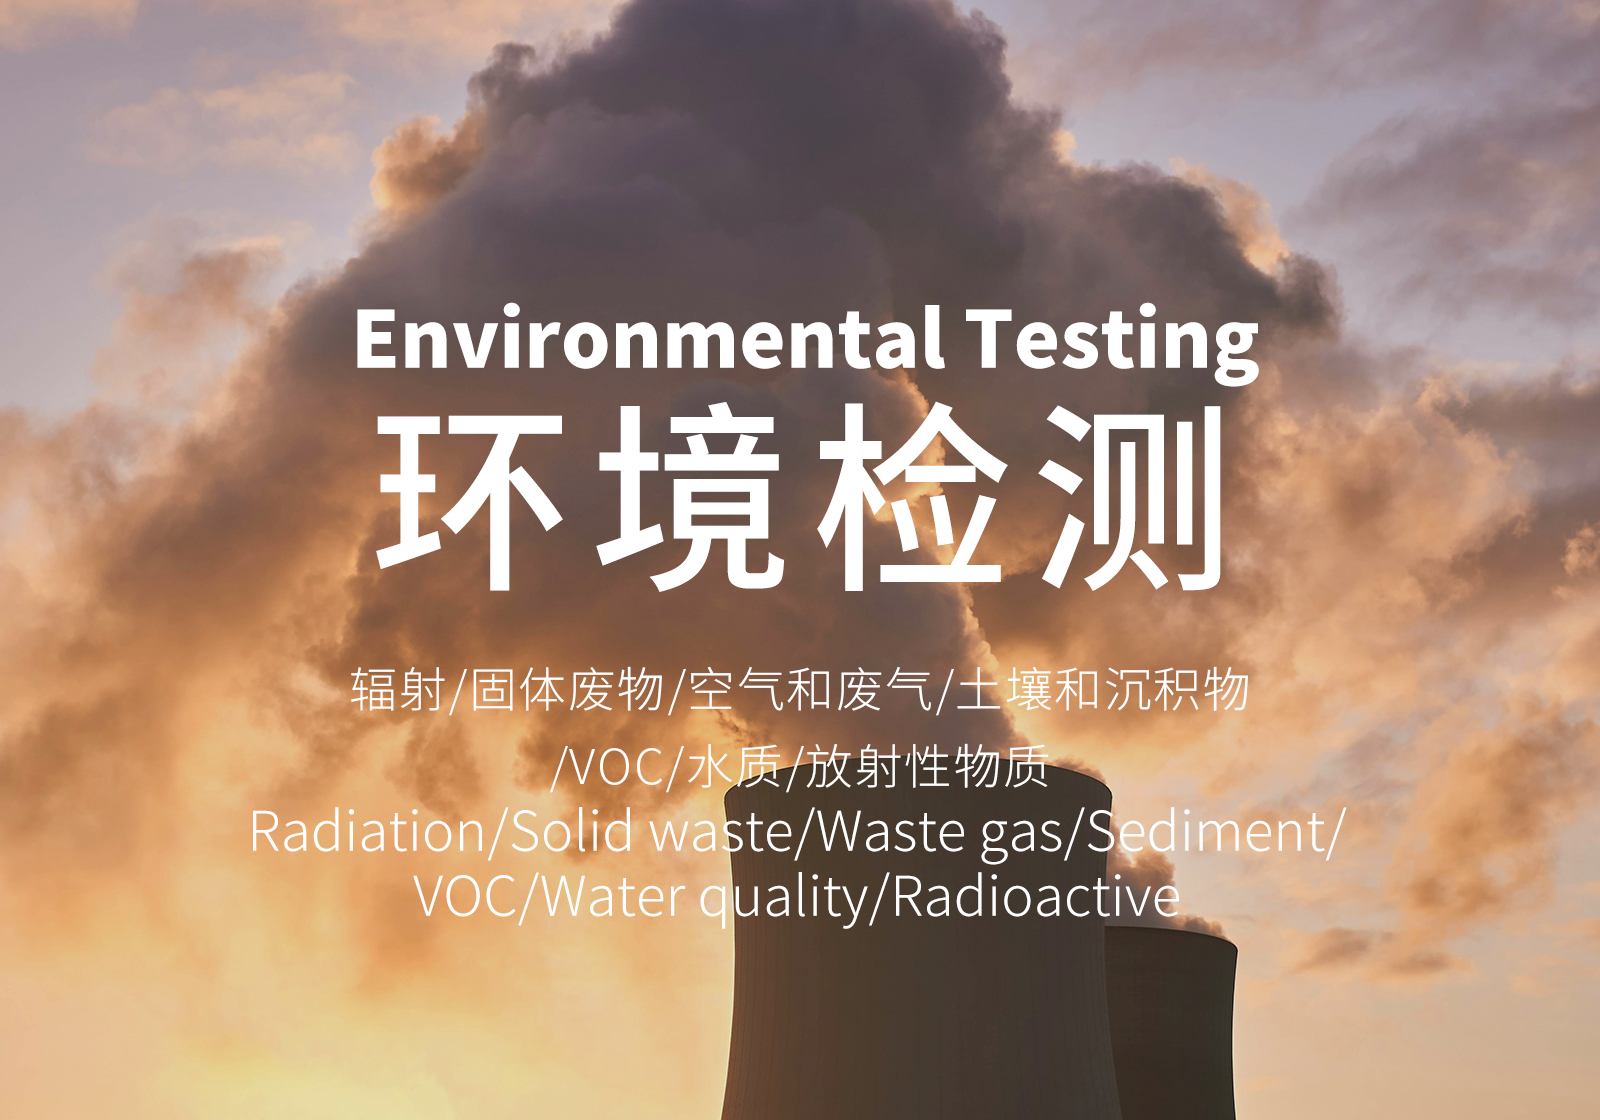 Environmental testing